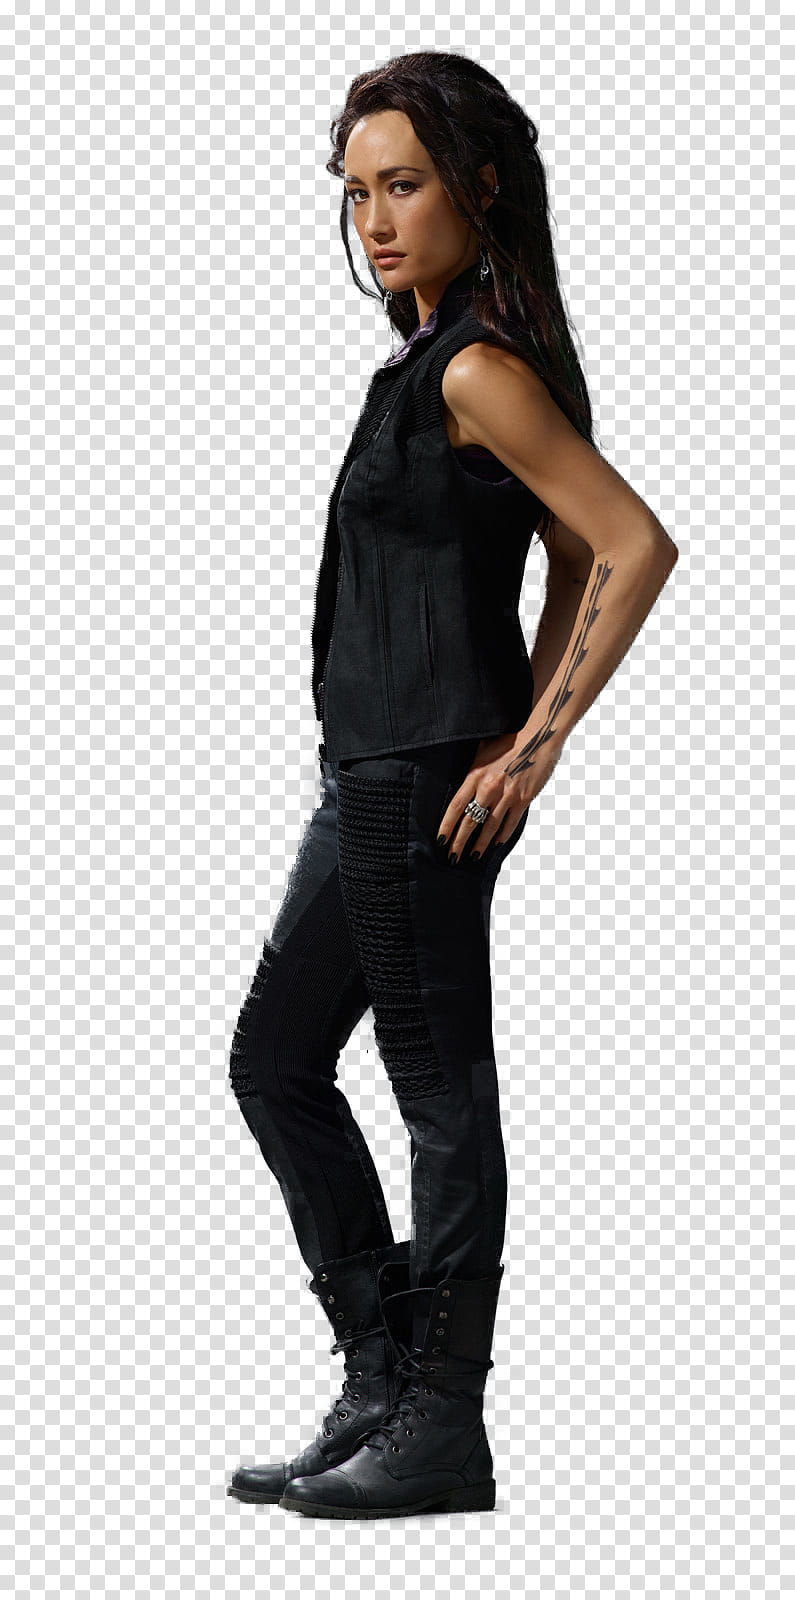 Divergent, woman in black pants transparent background PNG clipart